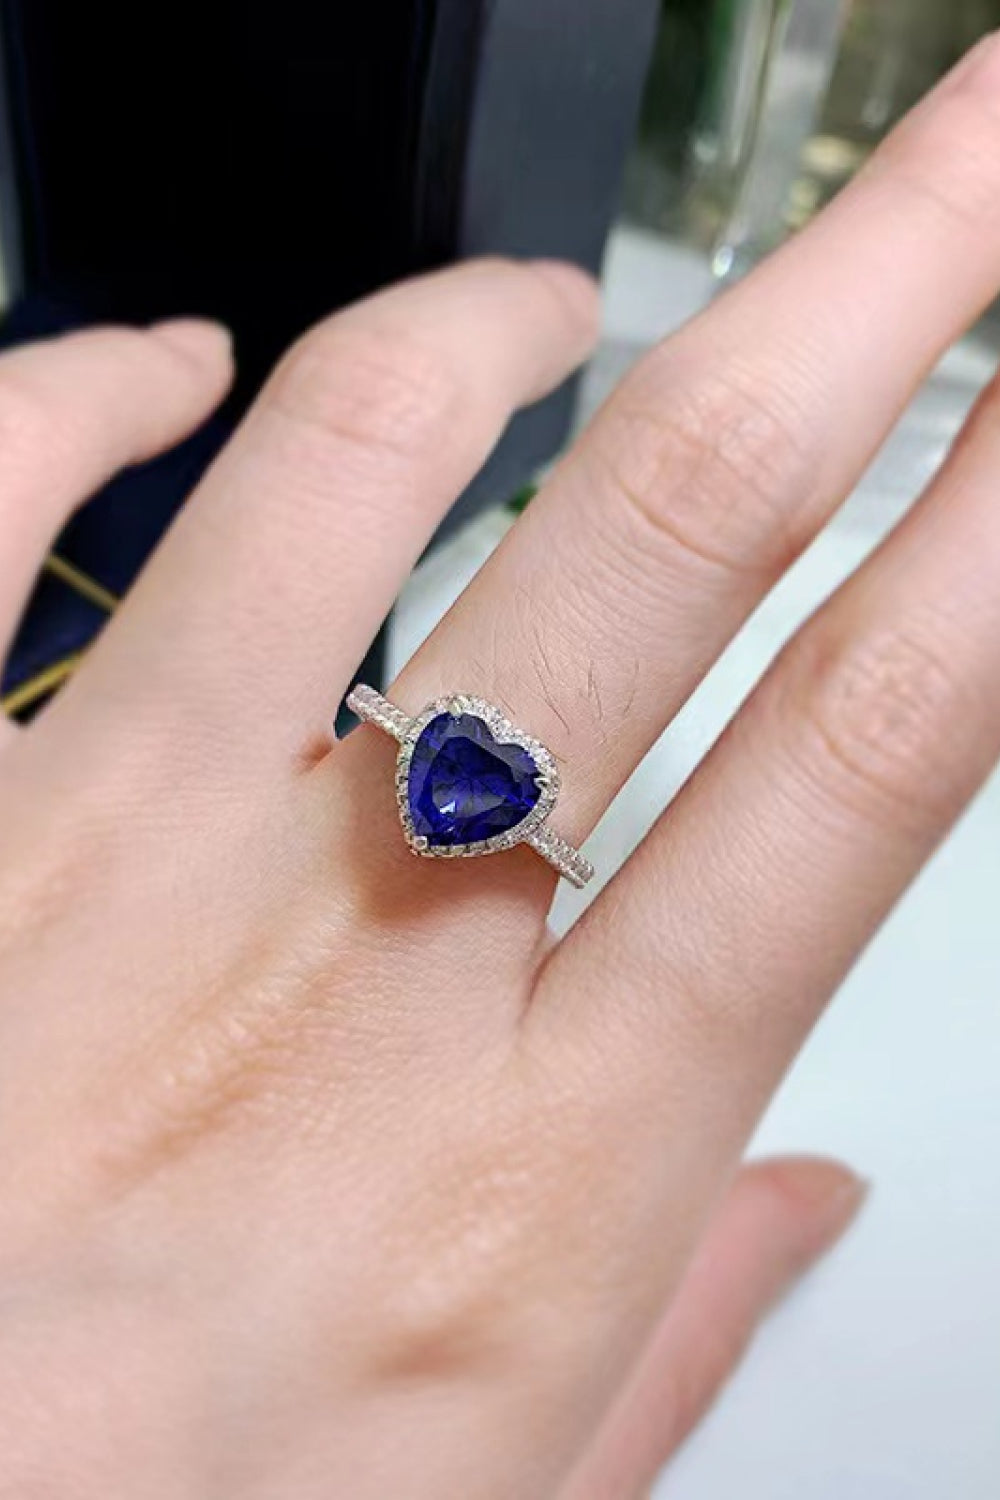 2 Carat Blue Moissanite Heart-Shaped Side Stone Ring - Sparkala